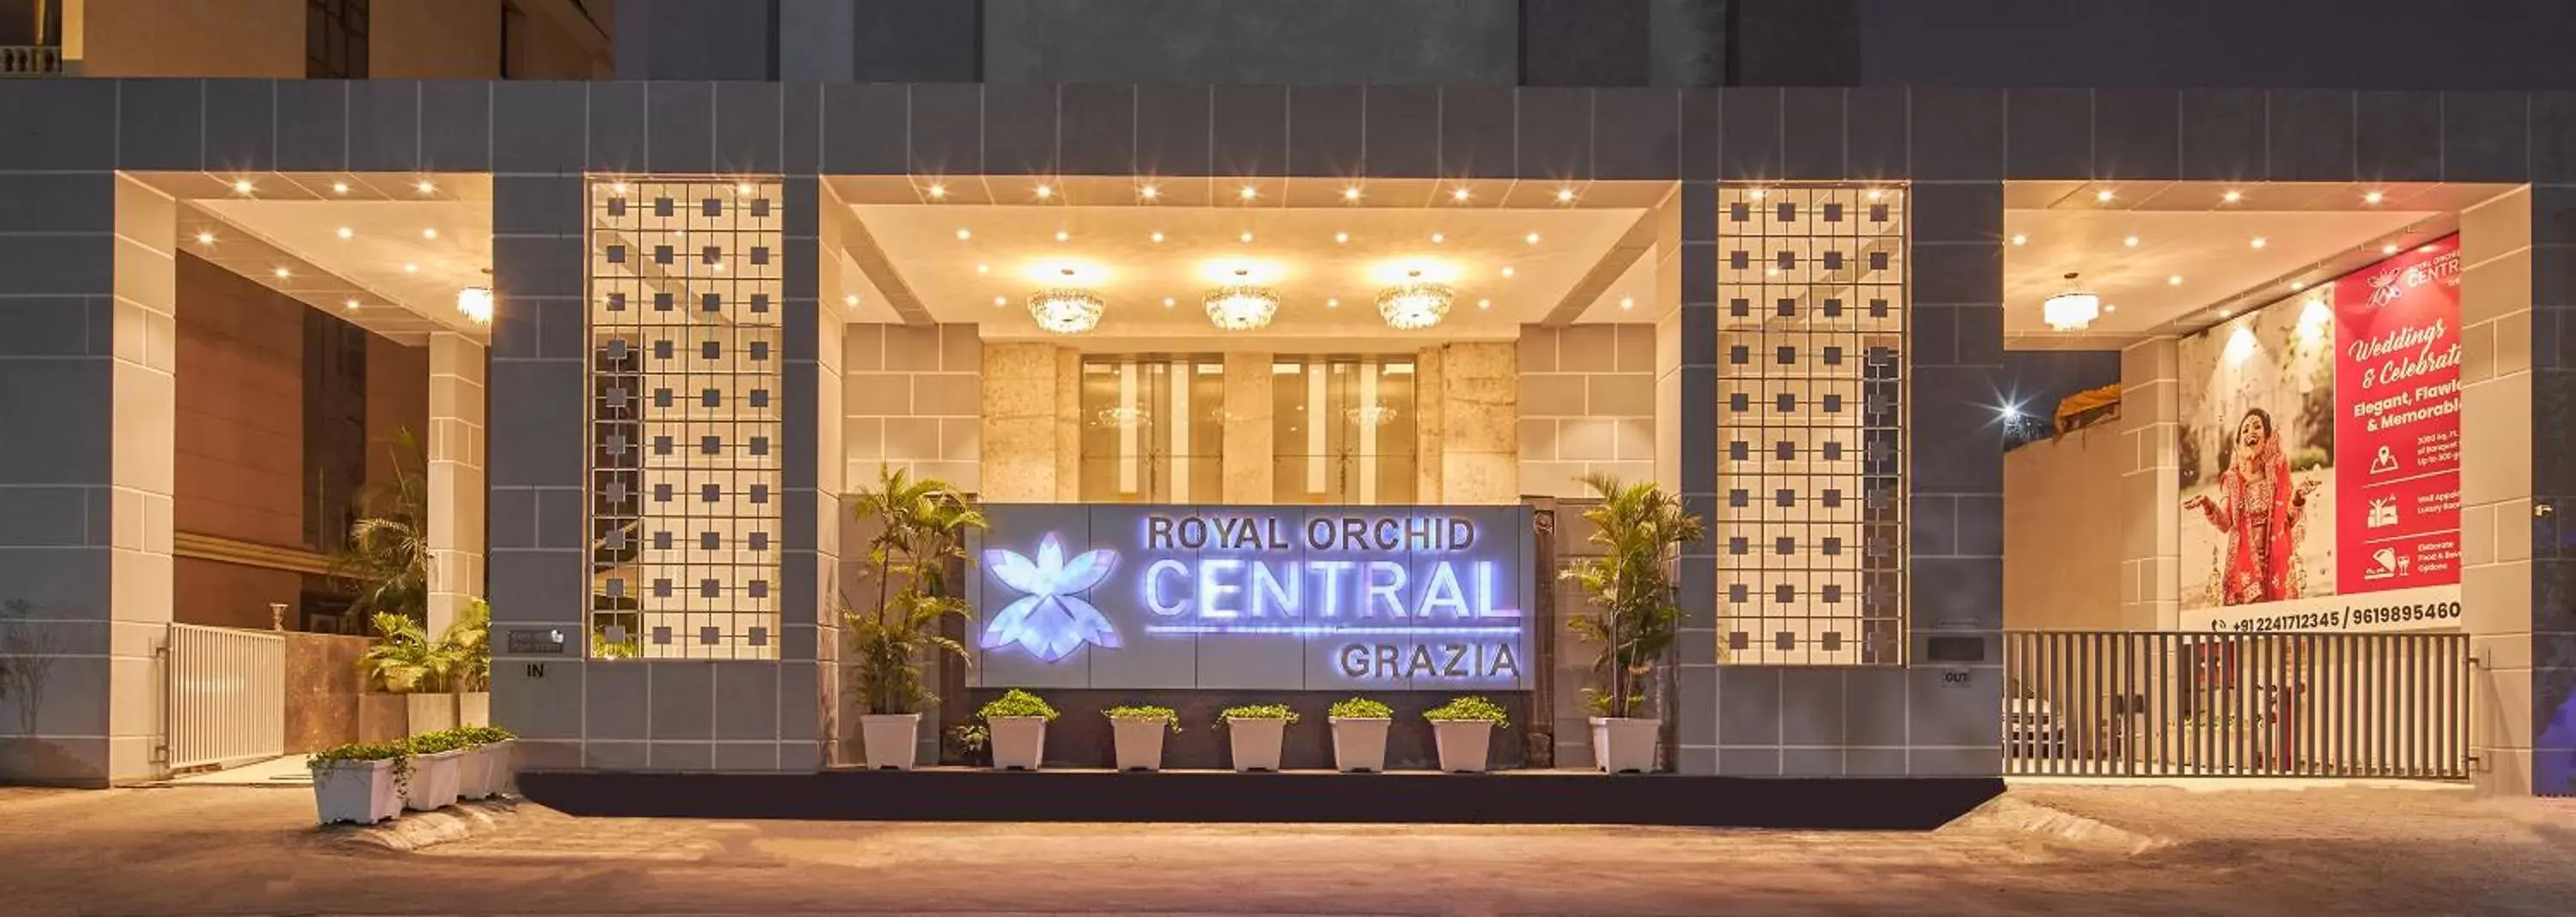 Property building, TV/Entertainment Center in Royal Orchid Central Grazia, Navi Mumbai